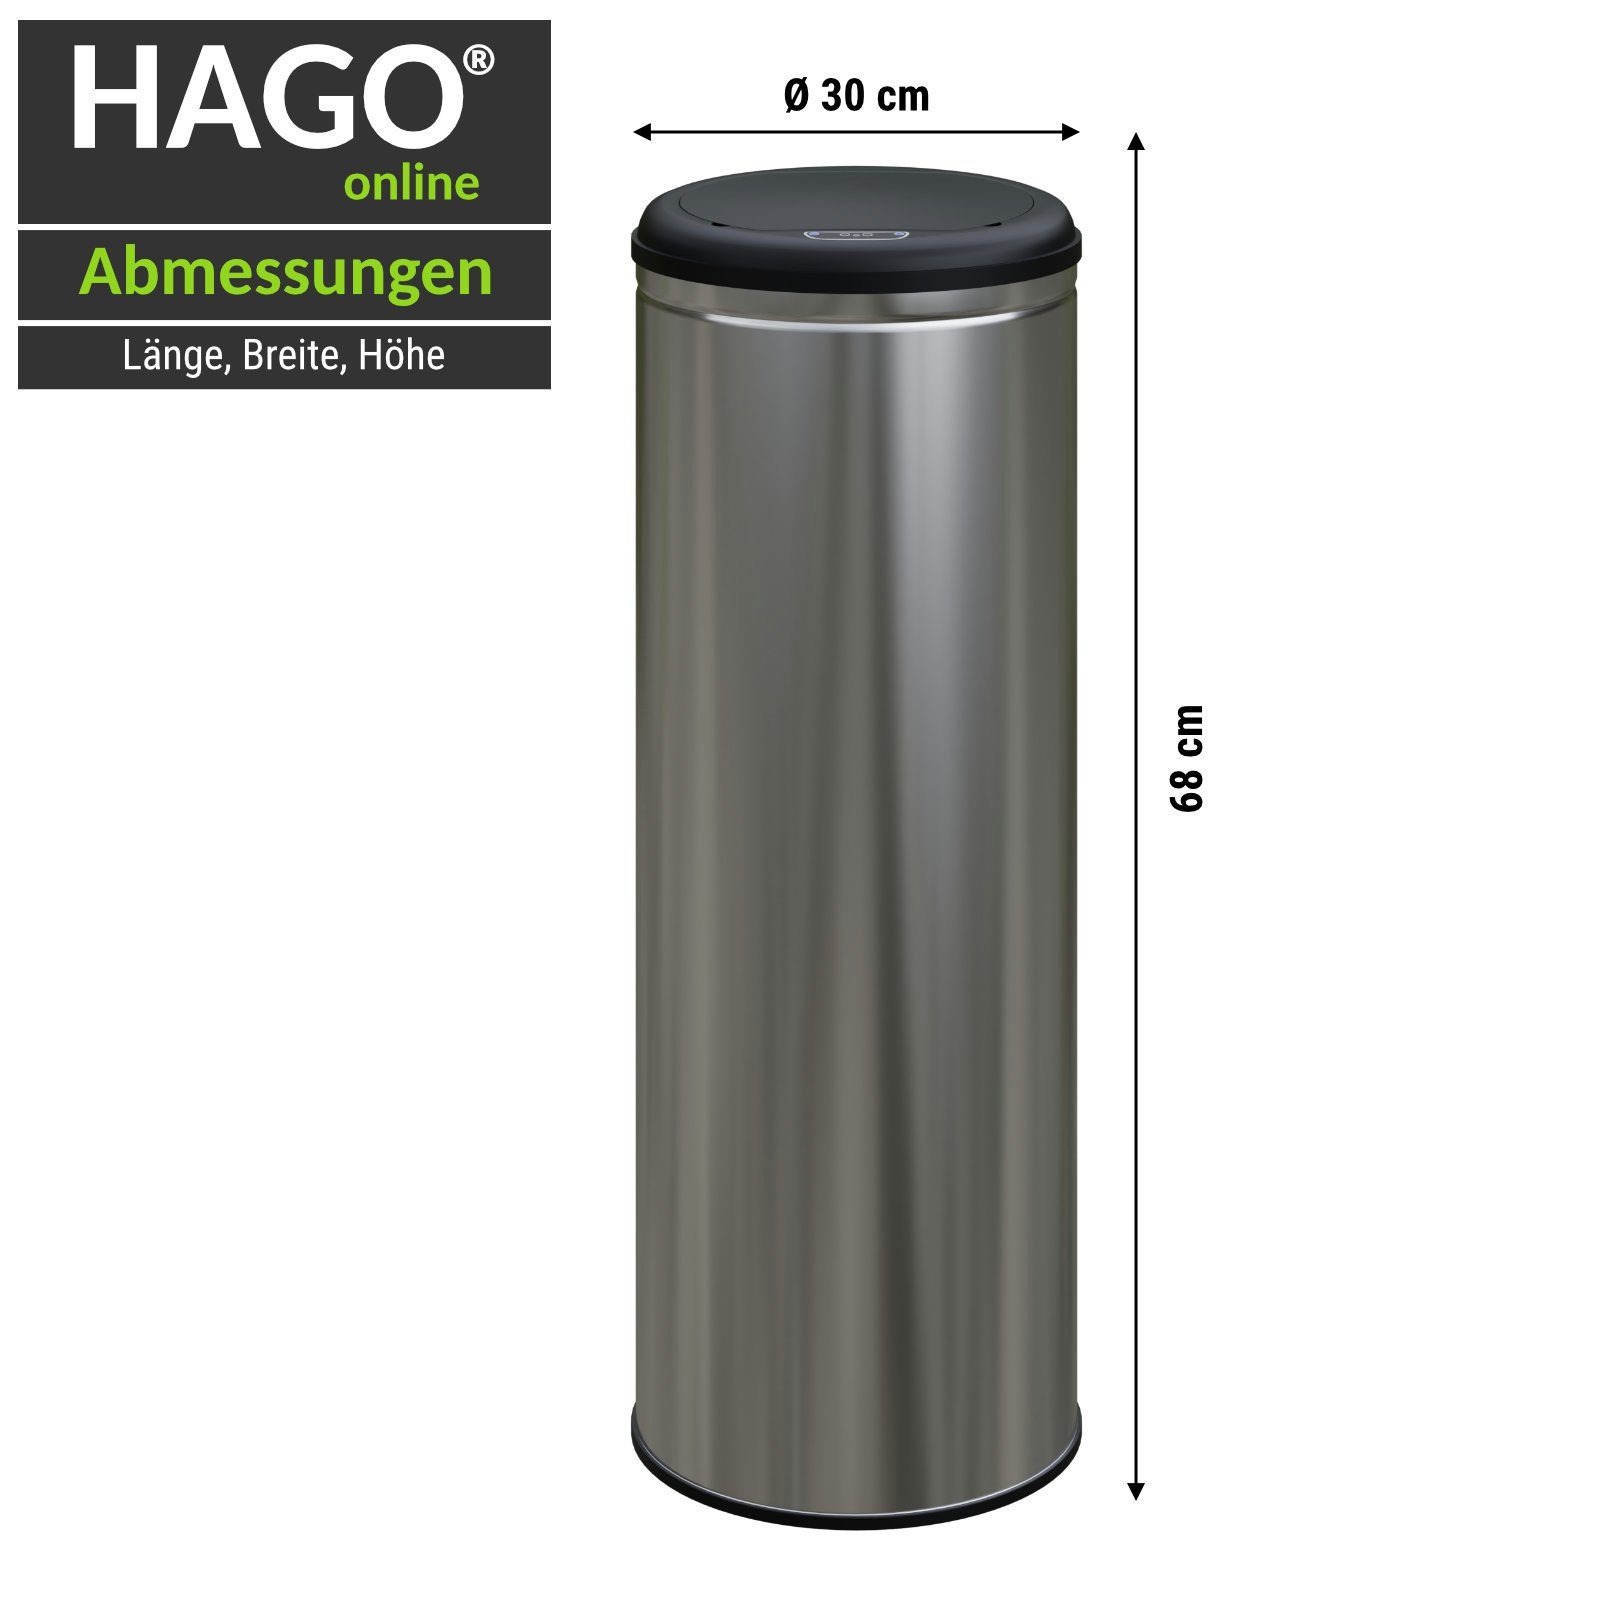 HAGO Mülltrennsystem Premium Edelstahl silber Sensor Papierkorb Mülleimer Automatik Abfalleimer